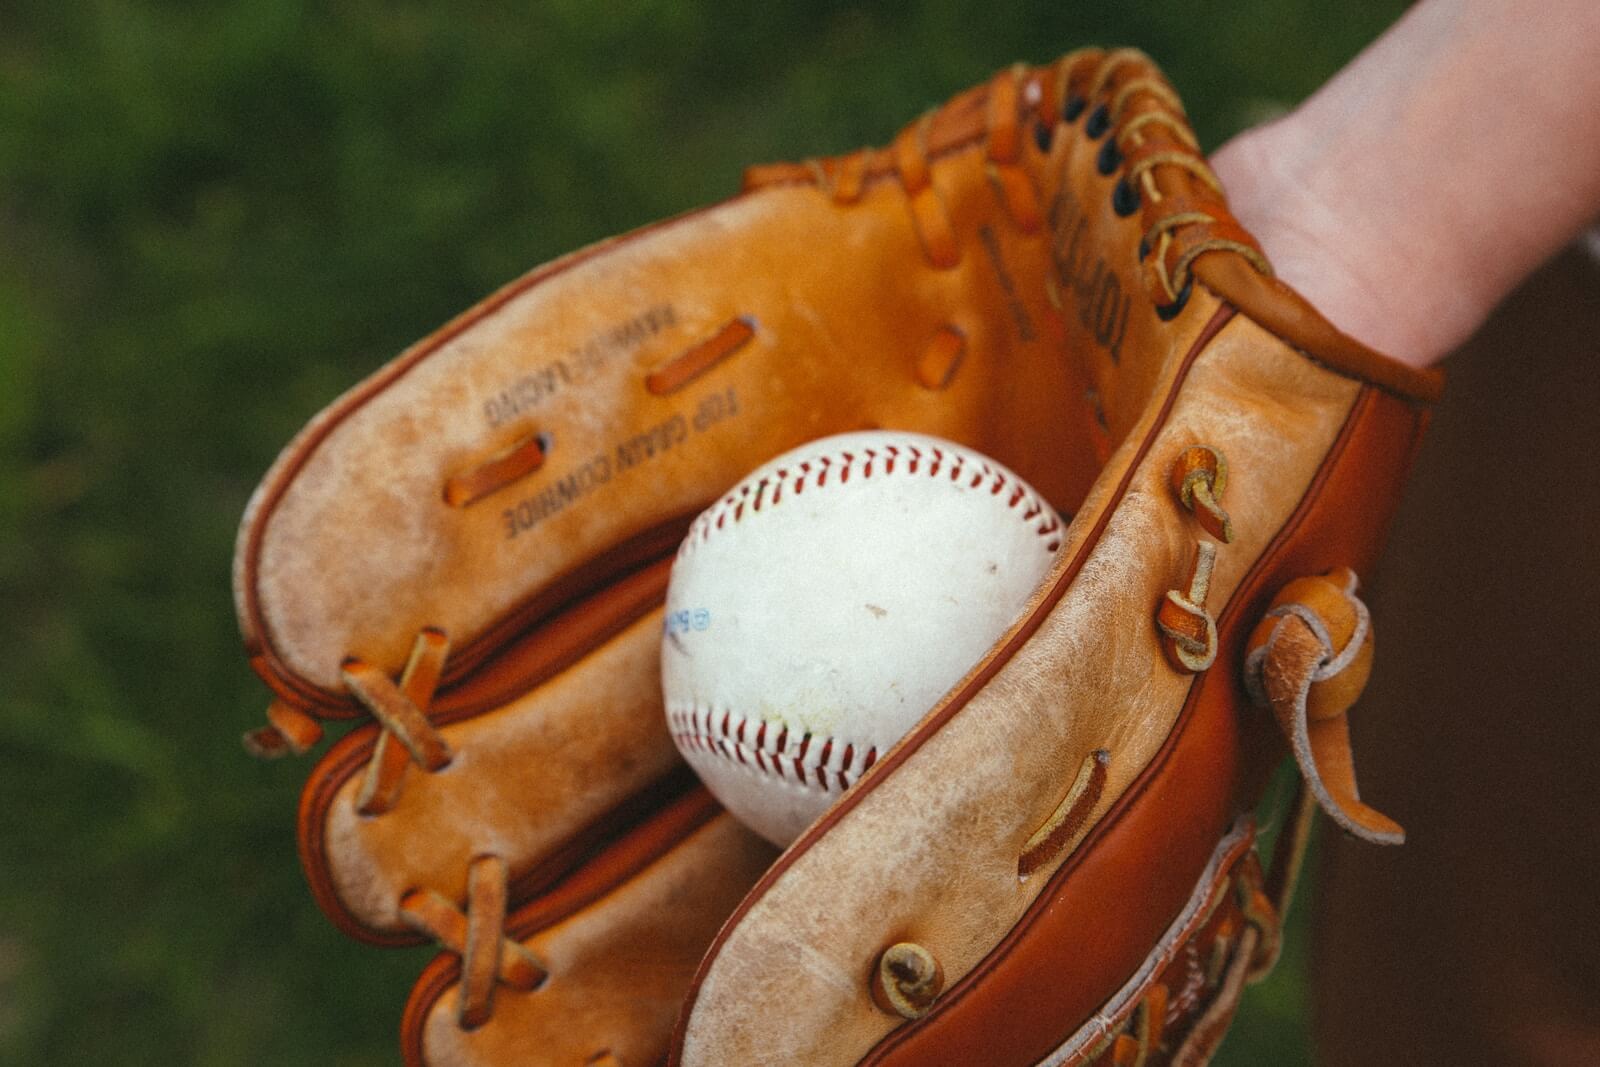 brown leather baseball mitt with white baseball